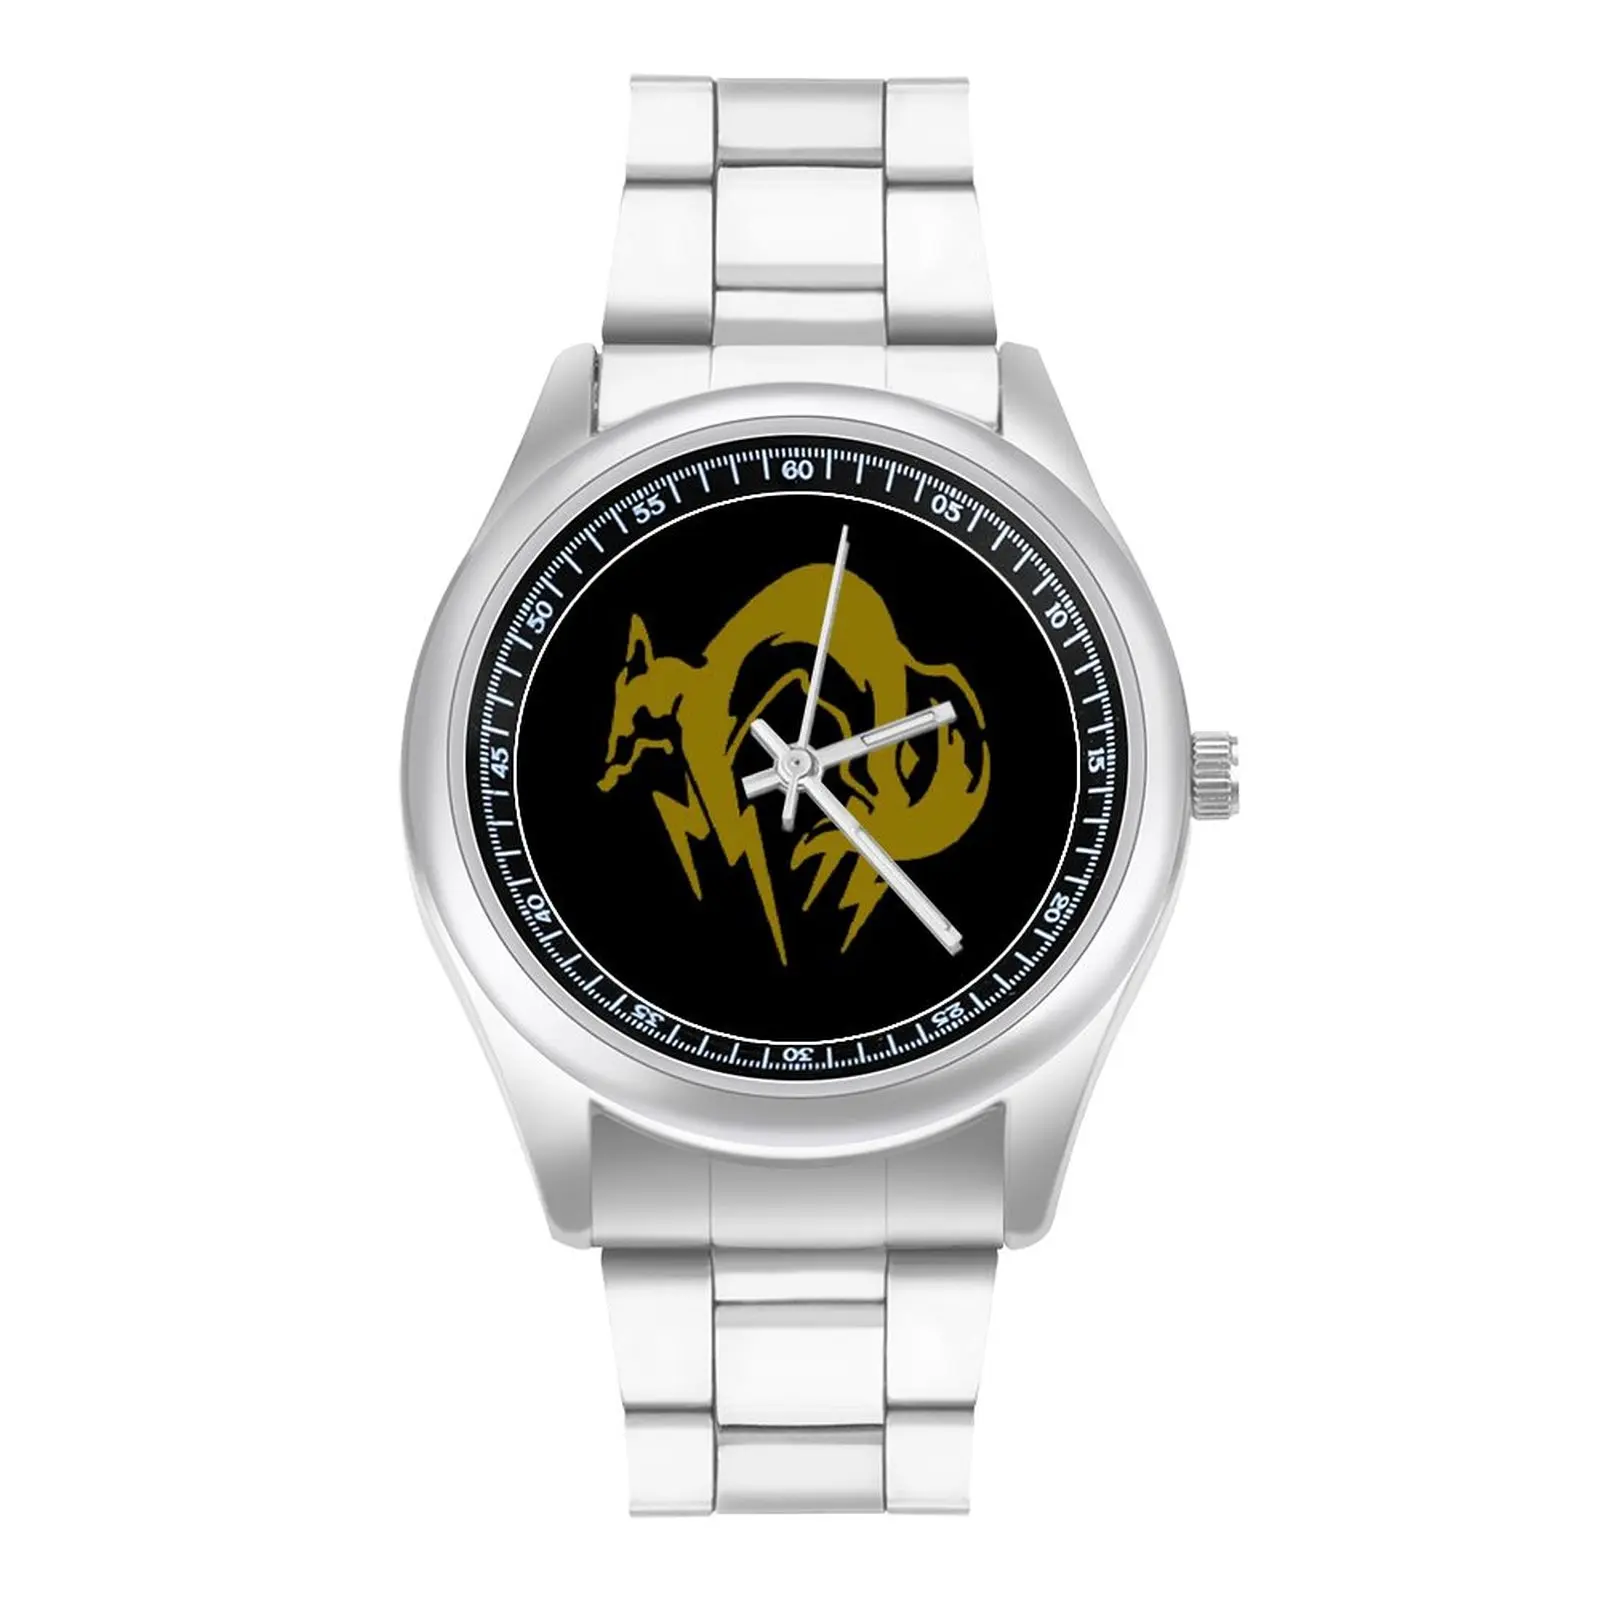 

Кварцевые часы Stealth, наручные часы со стальным дизайном, цветные Высококачественные наручные часы для девушек в спортзале